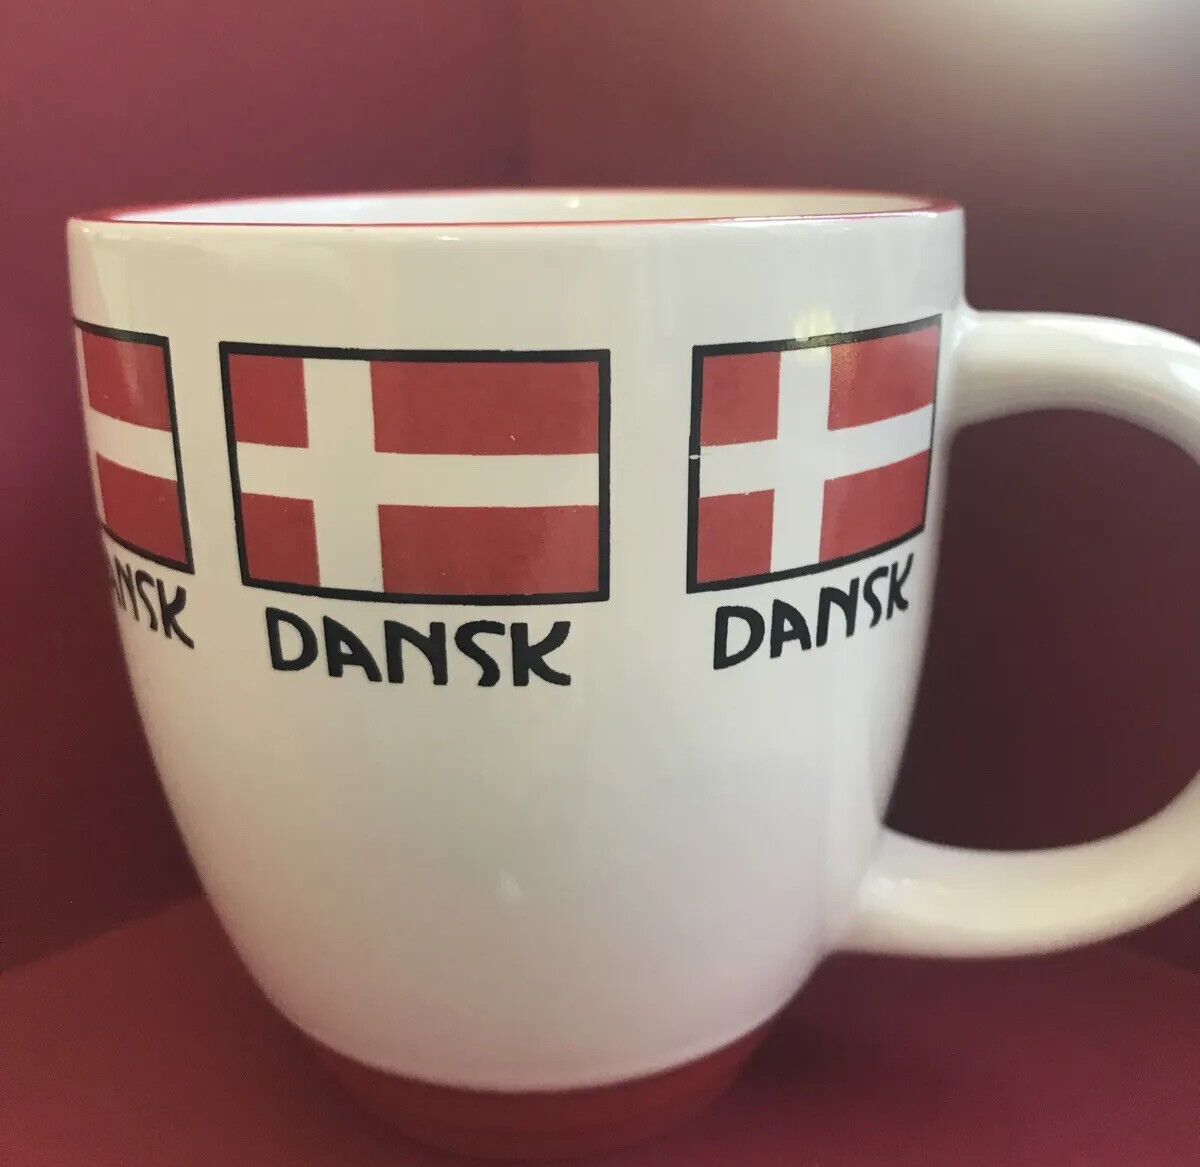 Danish Flag Coffee Mugs Tea/Coffee Cup 12 oz Denmark Dansk Bergquist Imports USA